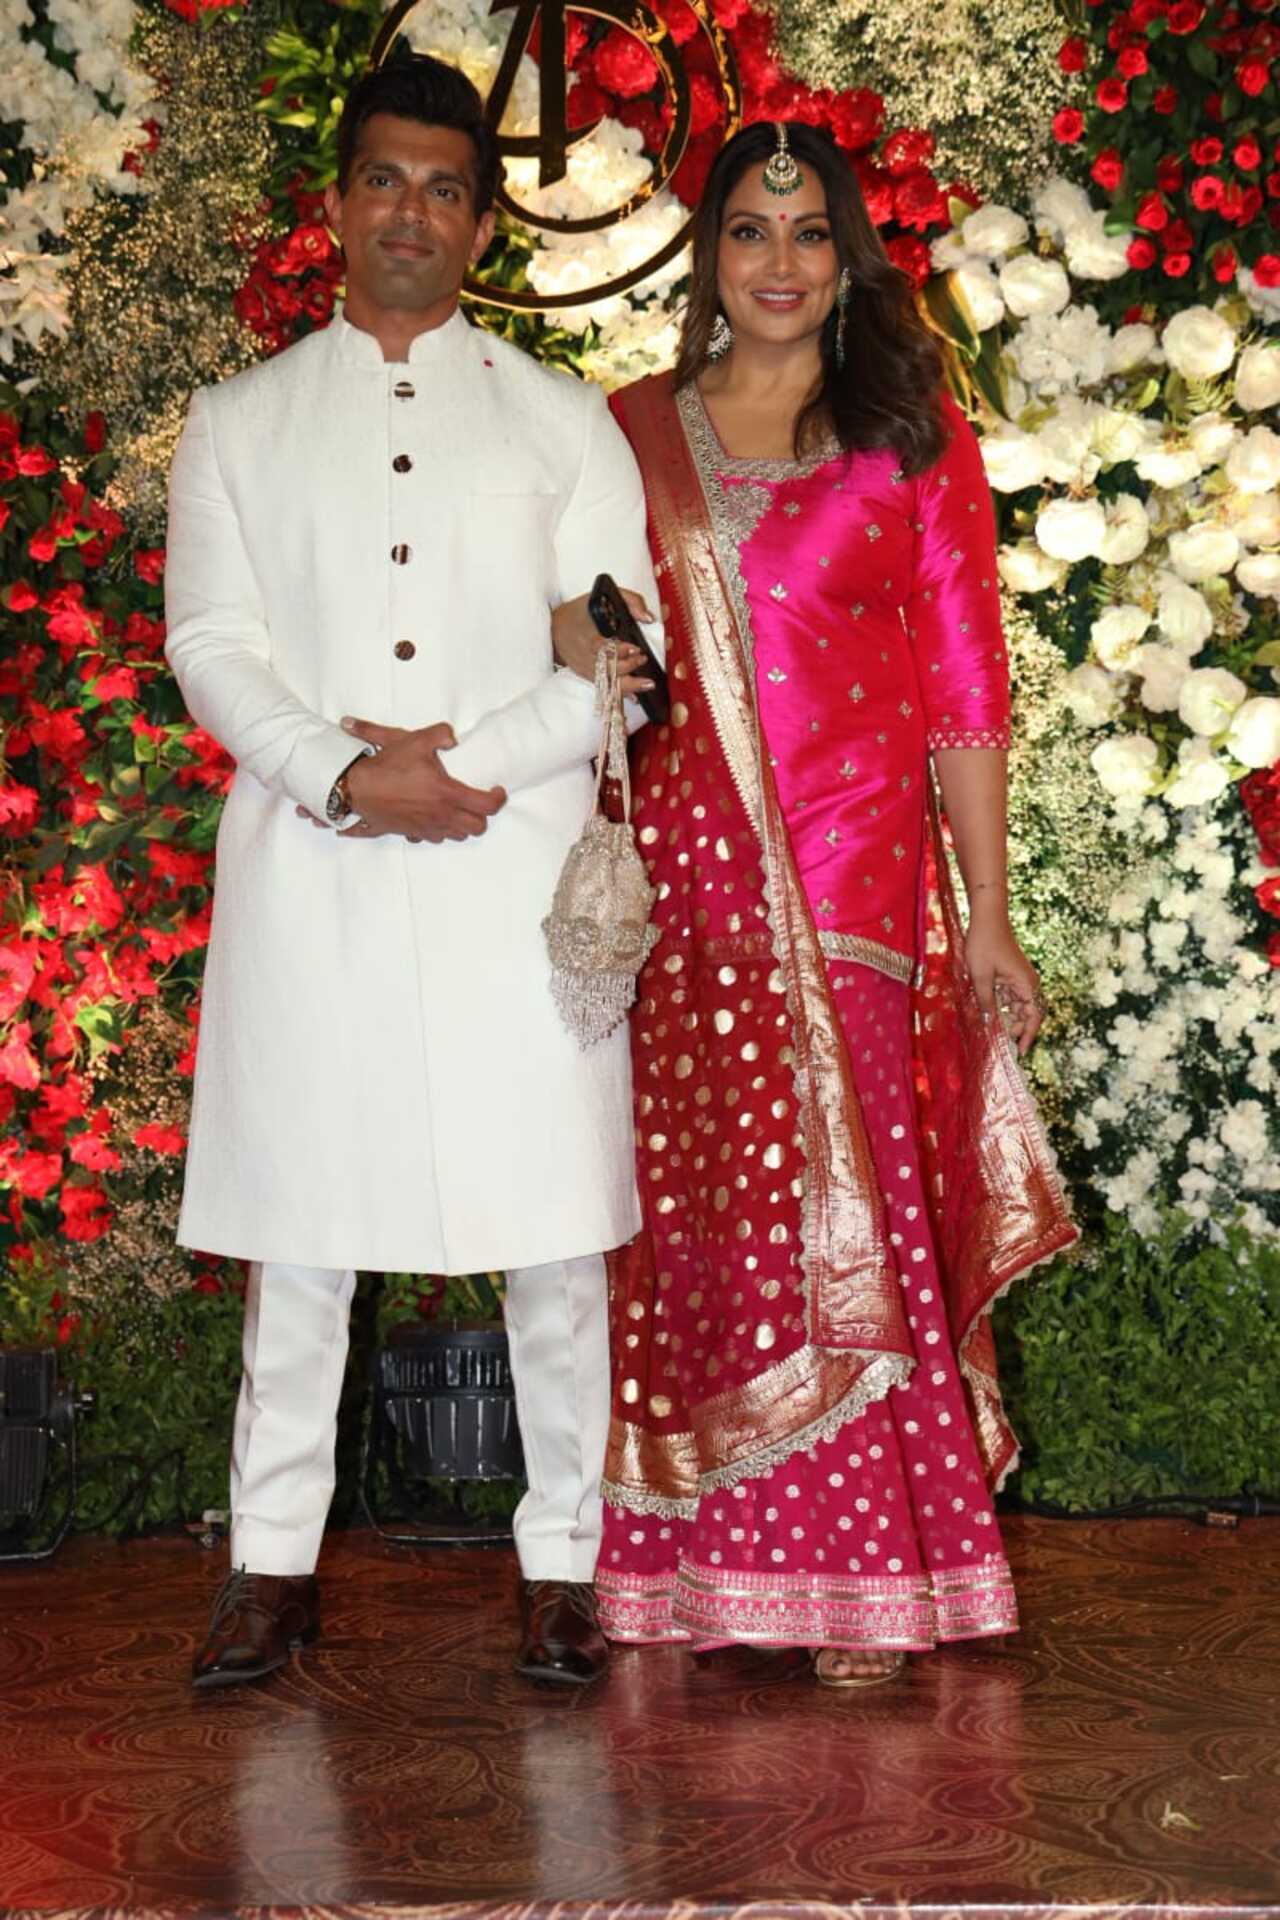 Karan Singh Grover and Bipasha Basu poses hand-in-hand at the wedding